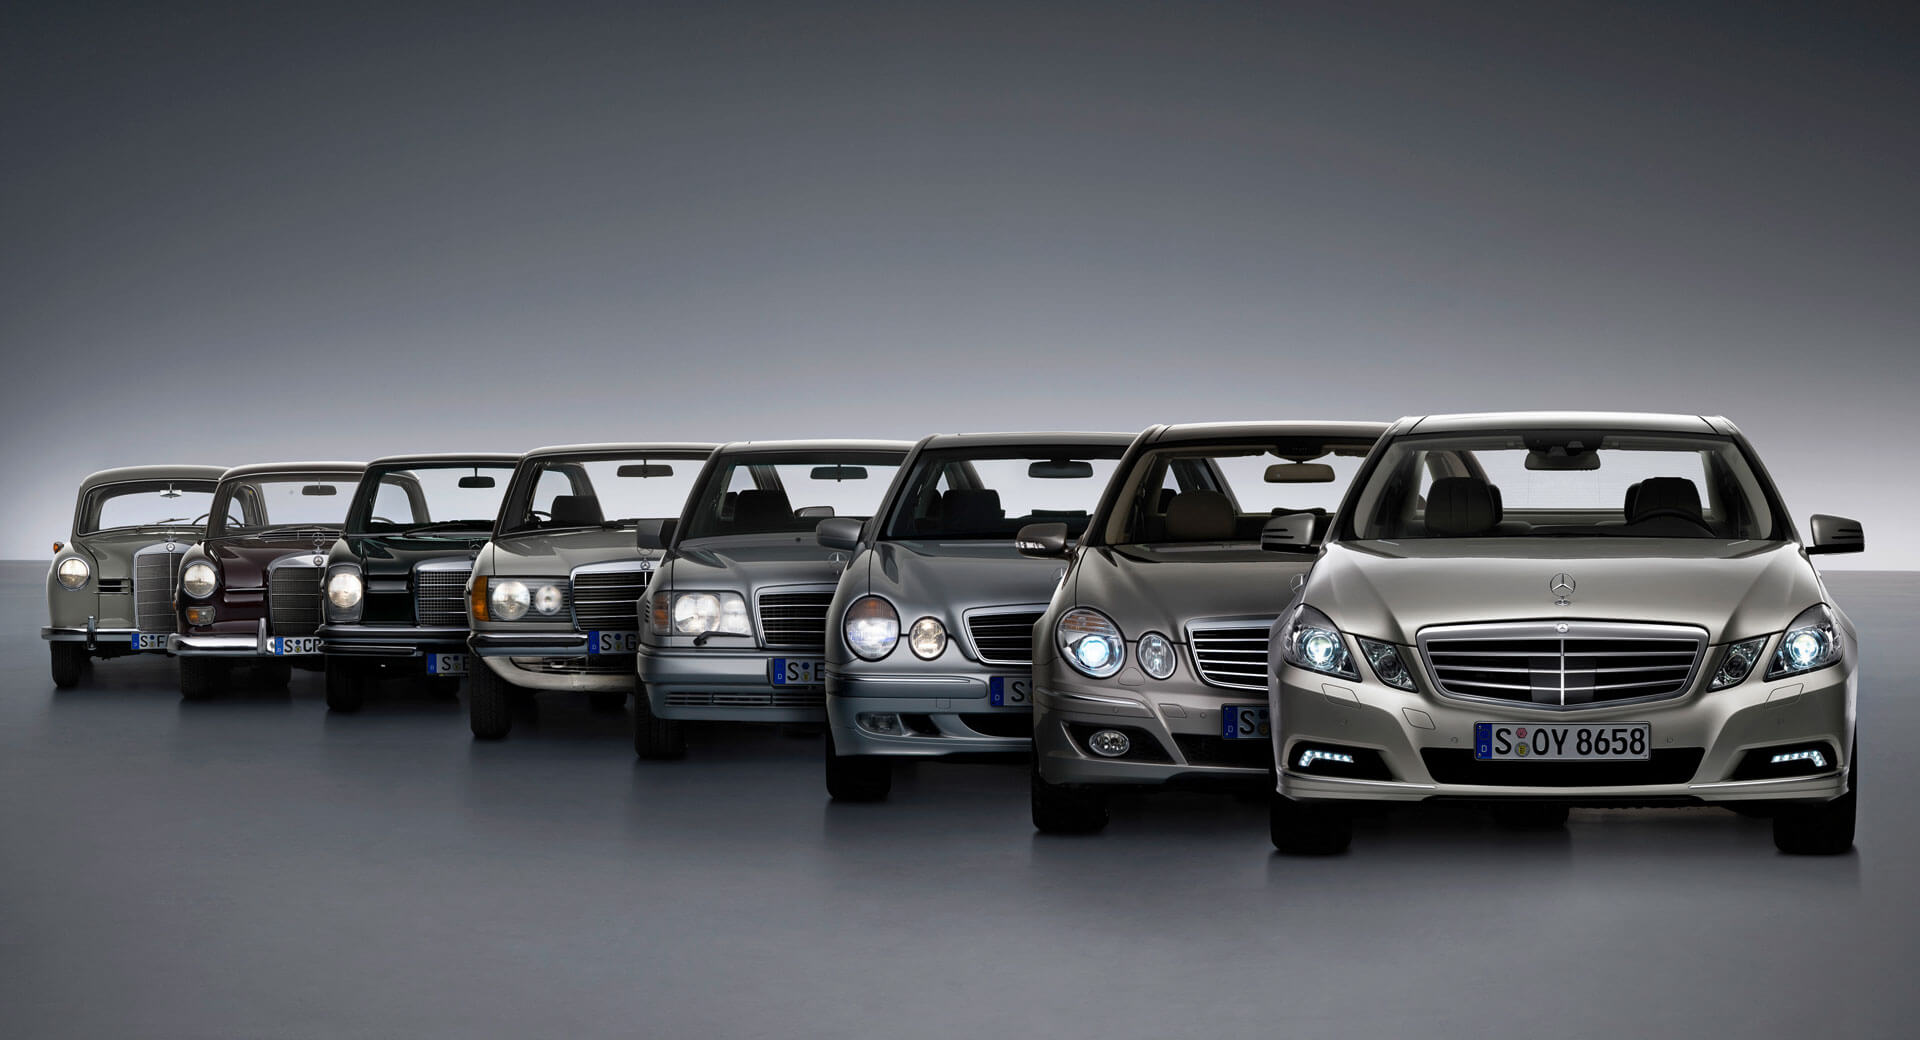 Mercedes-Benz E-Class Estate [W213] (2016 - 2020) used car review